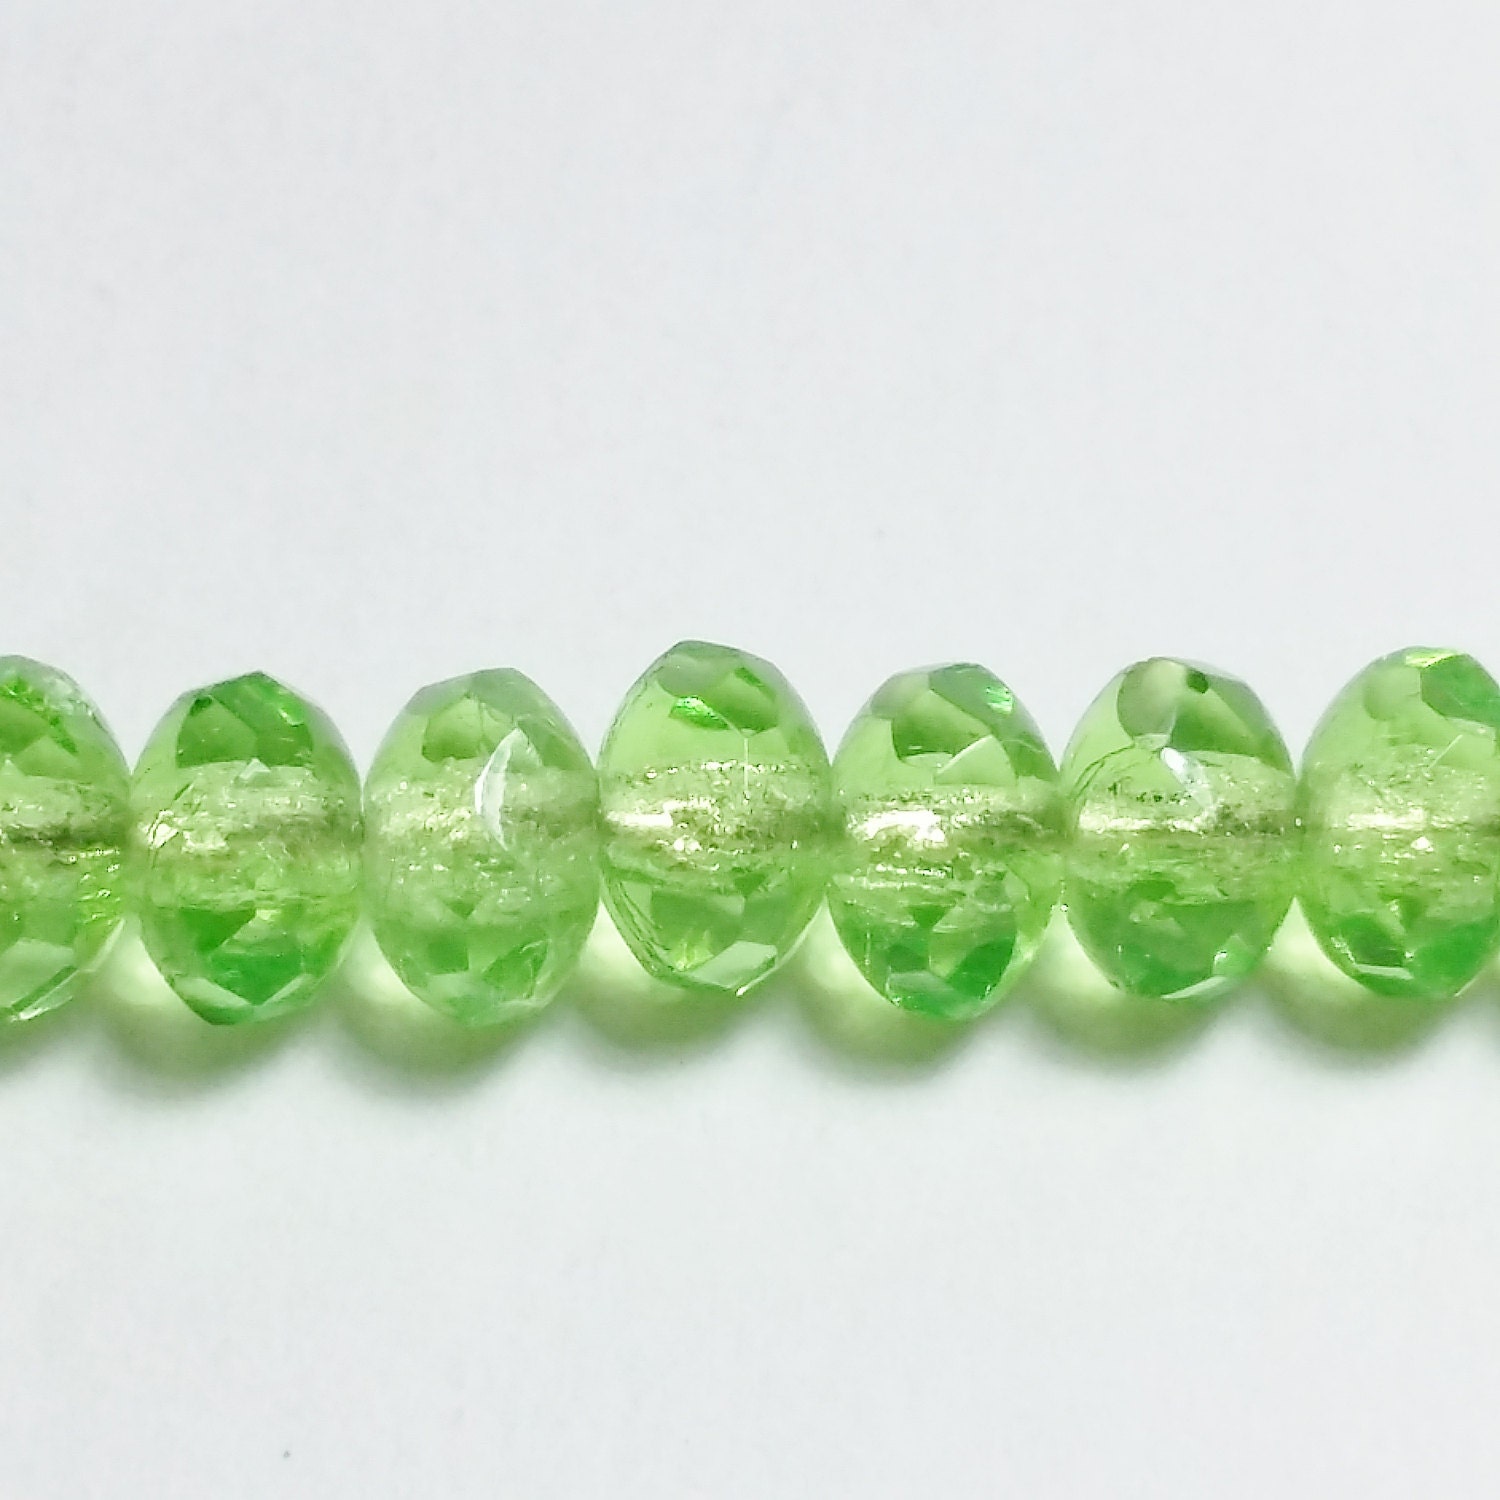 5x3mm 40pcs Bright Green Czech Glass Rondelle Beads GB391 